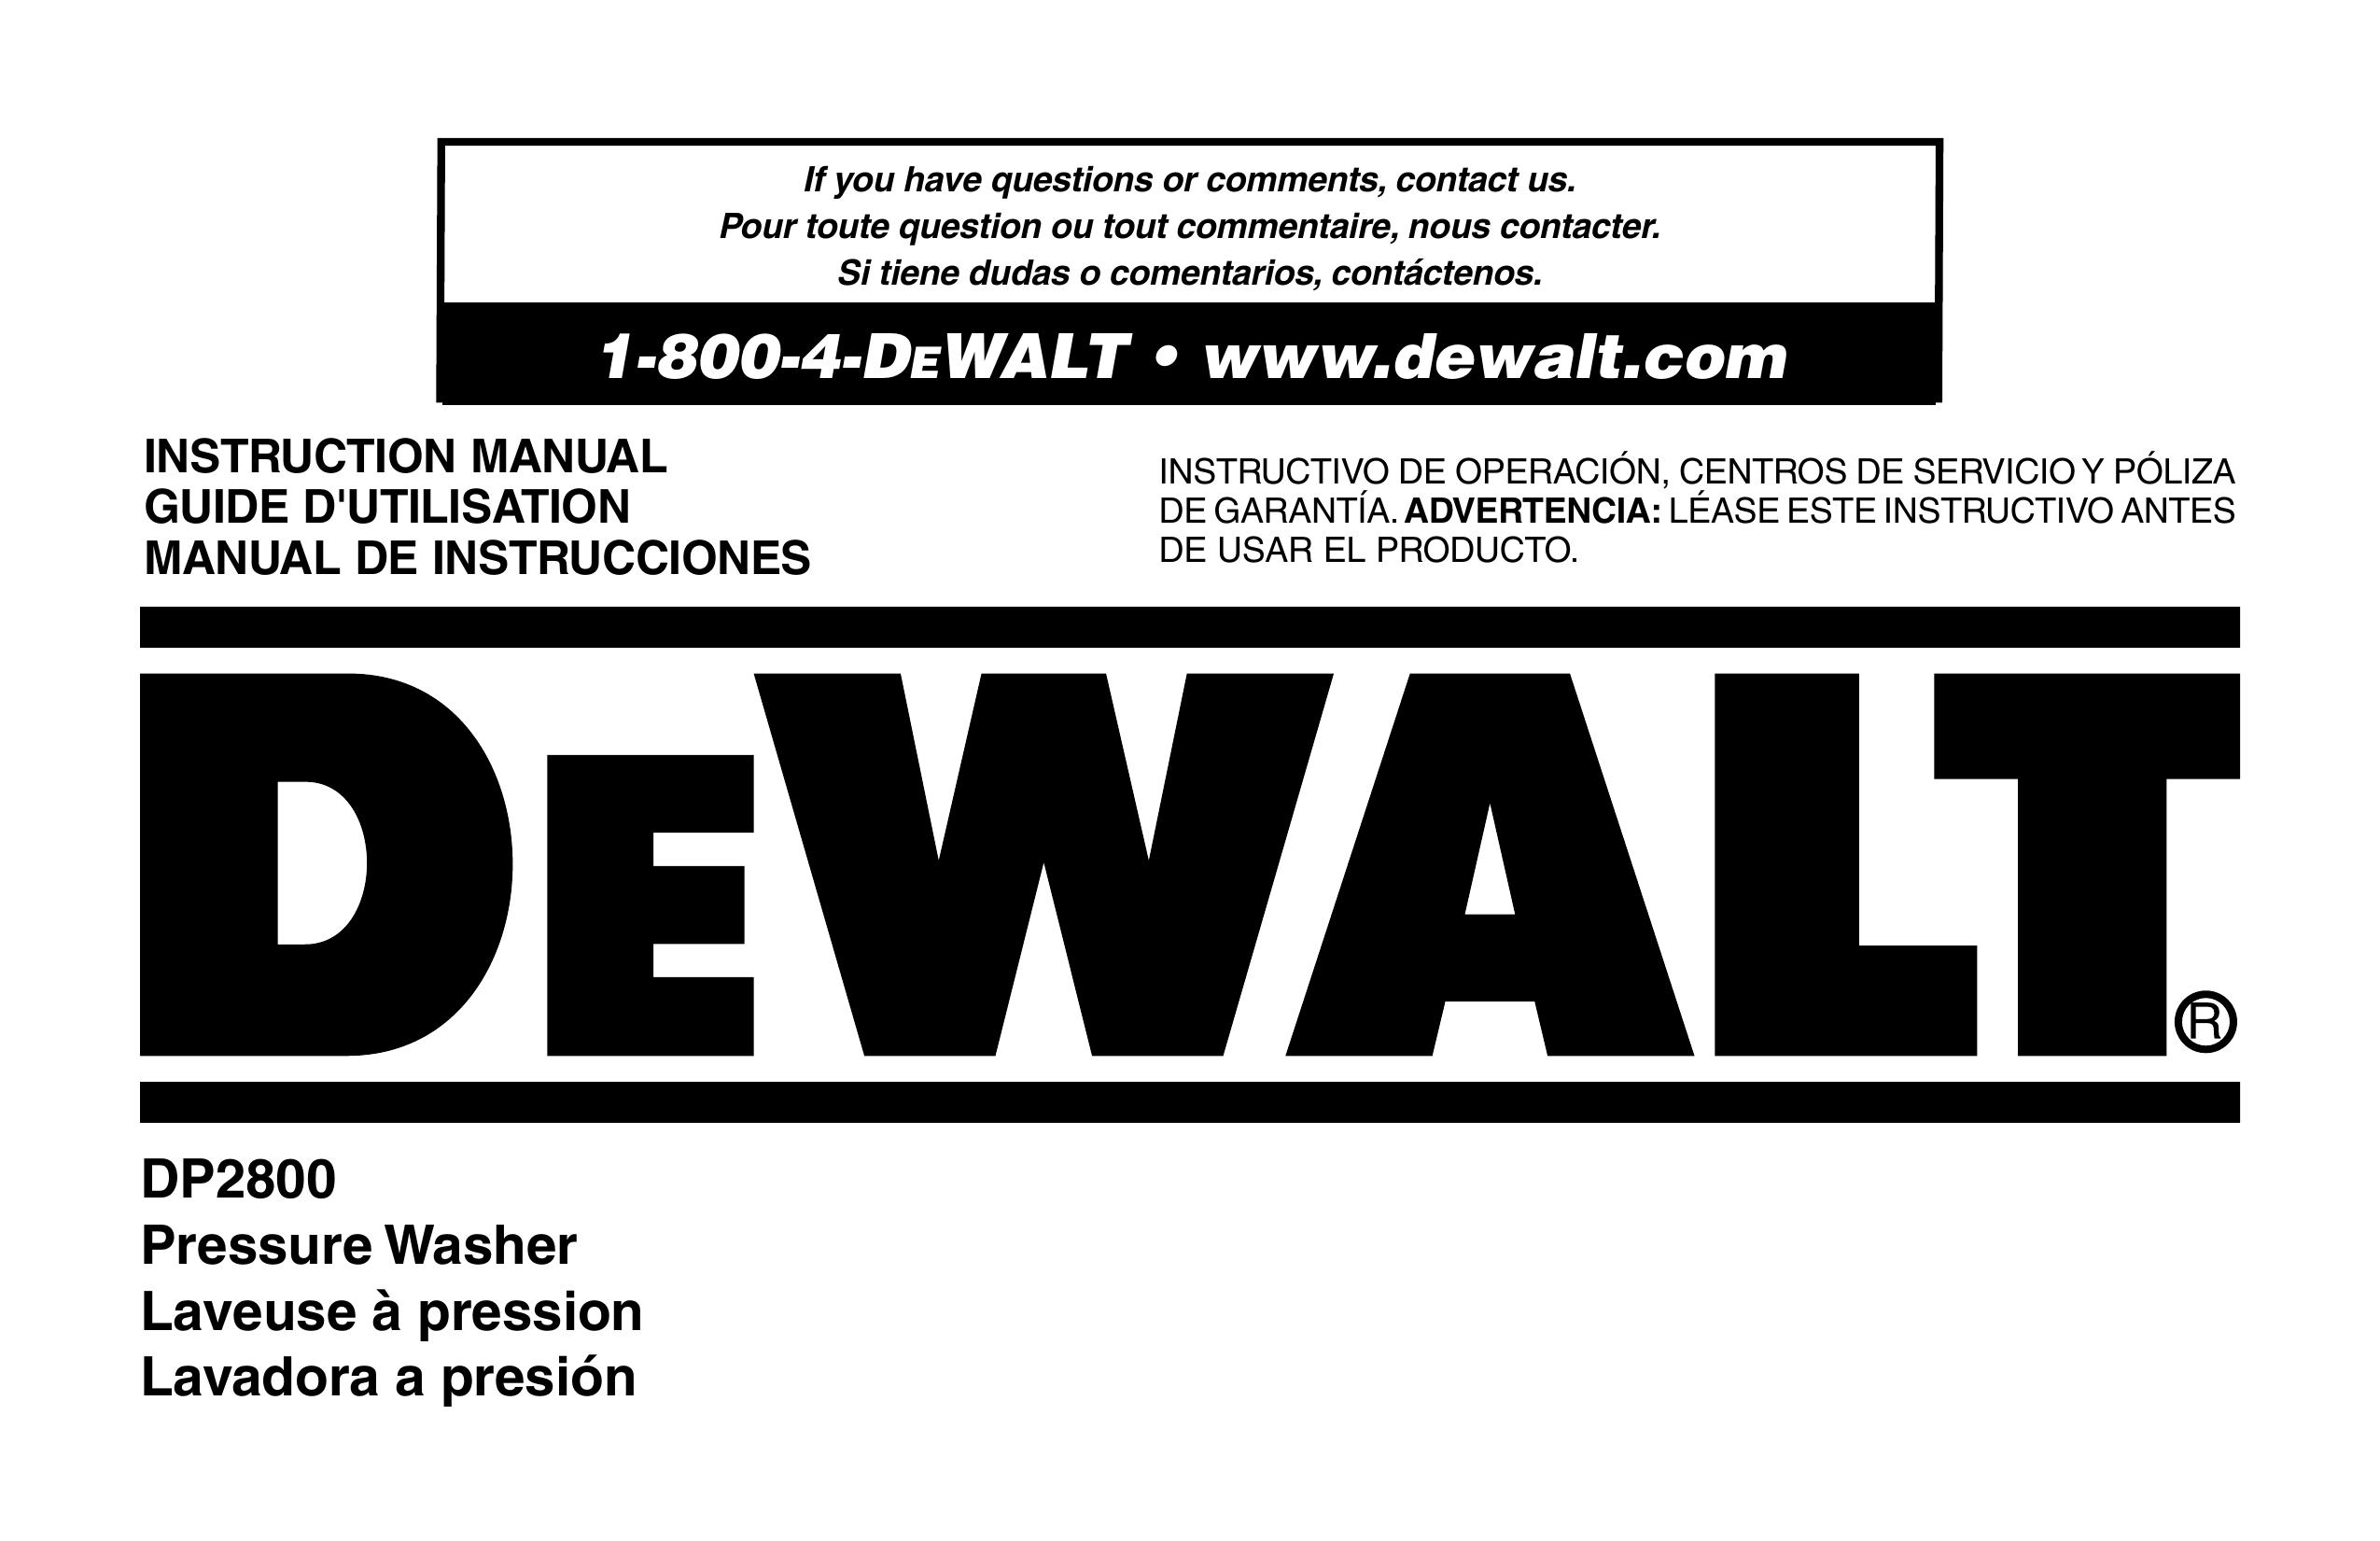 DeWalt A16505 Pressure Washer User Manual